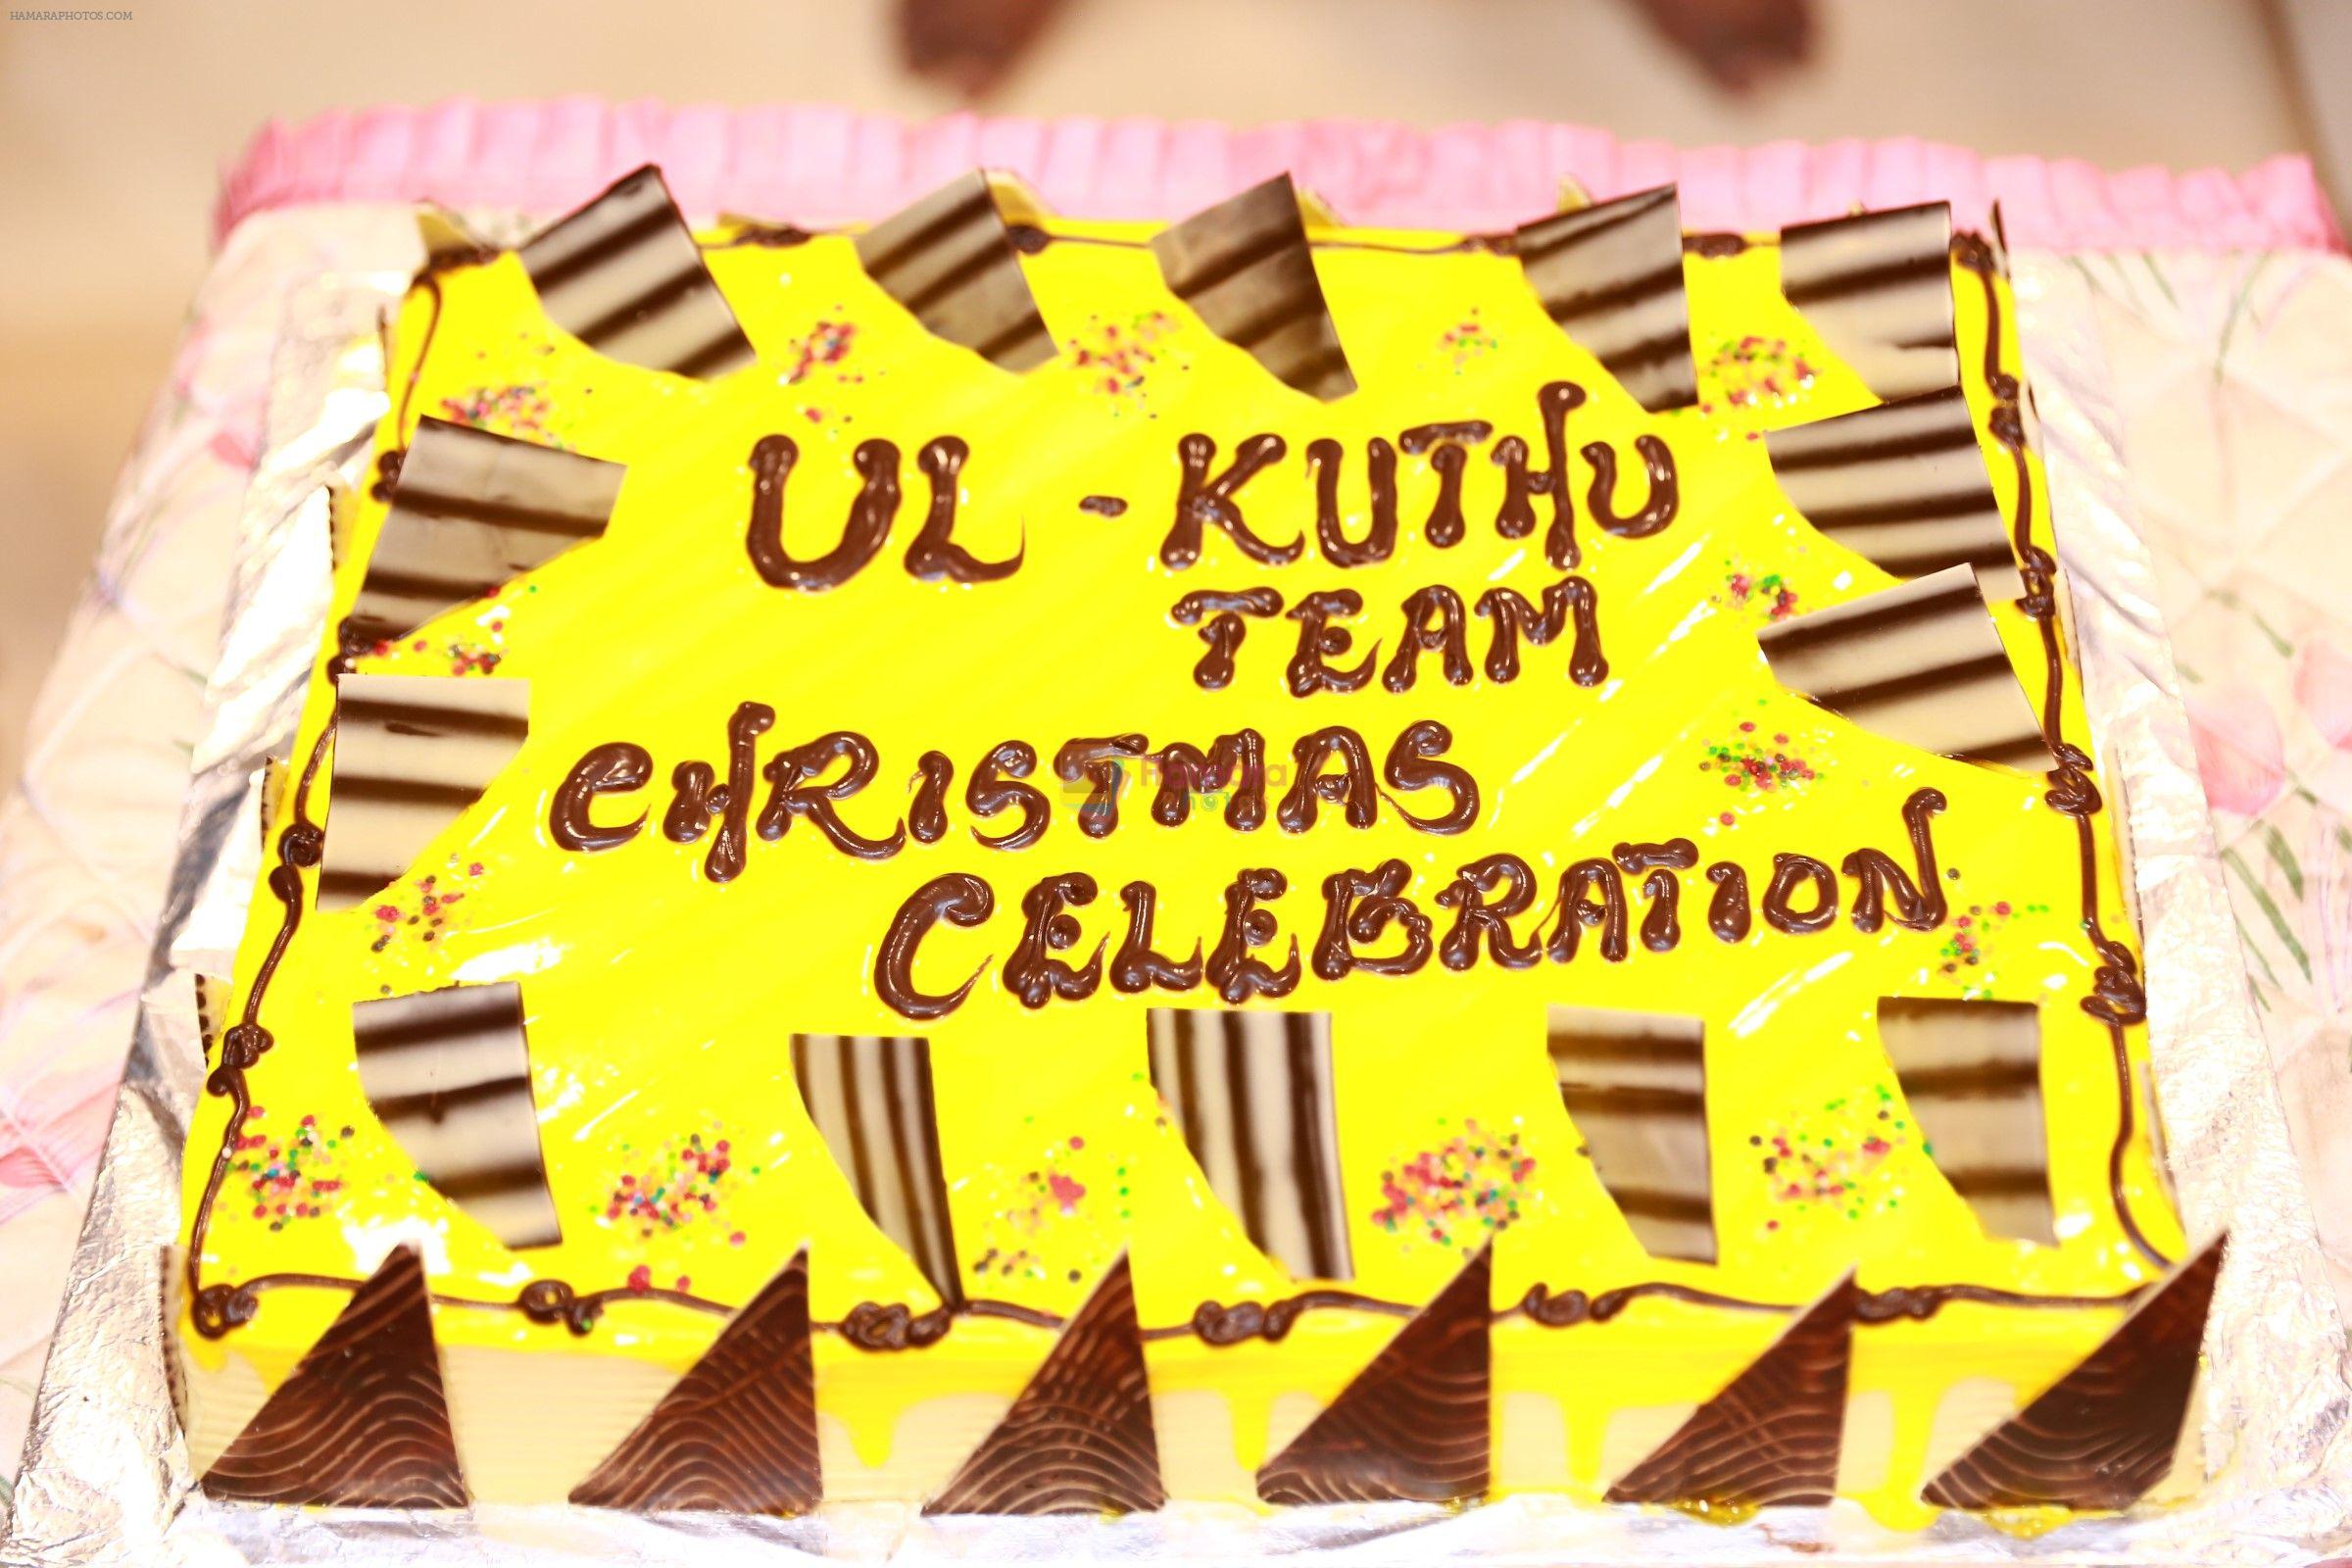 Ulkuthu team celebrates Christmas in style on 25th Dec 2017